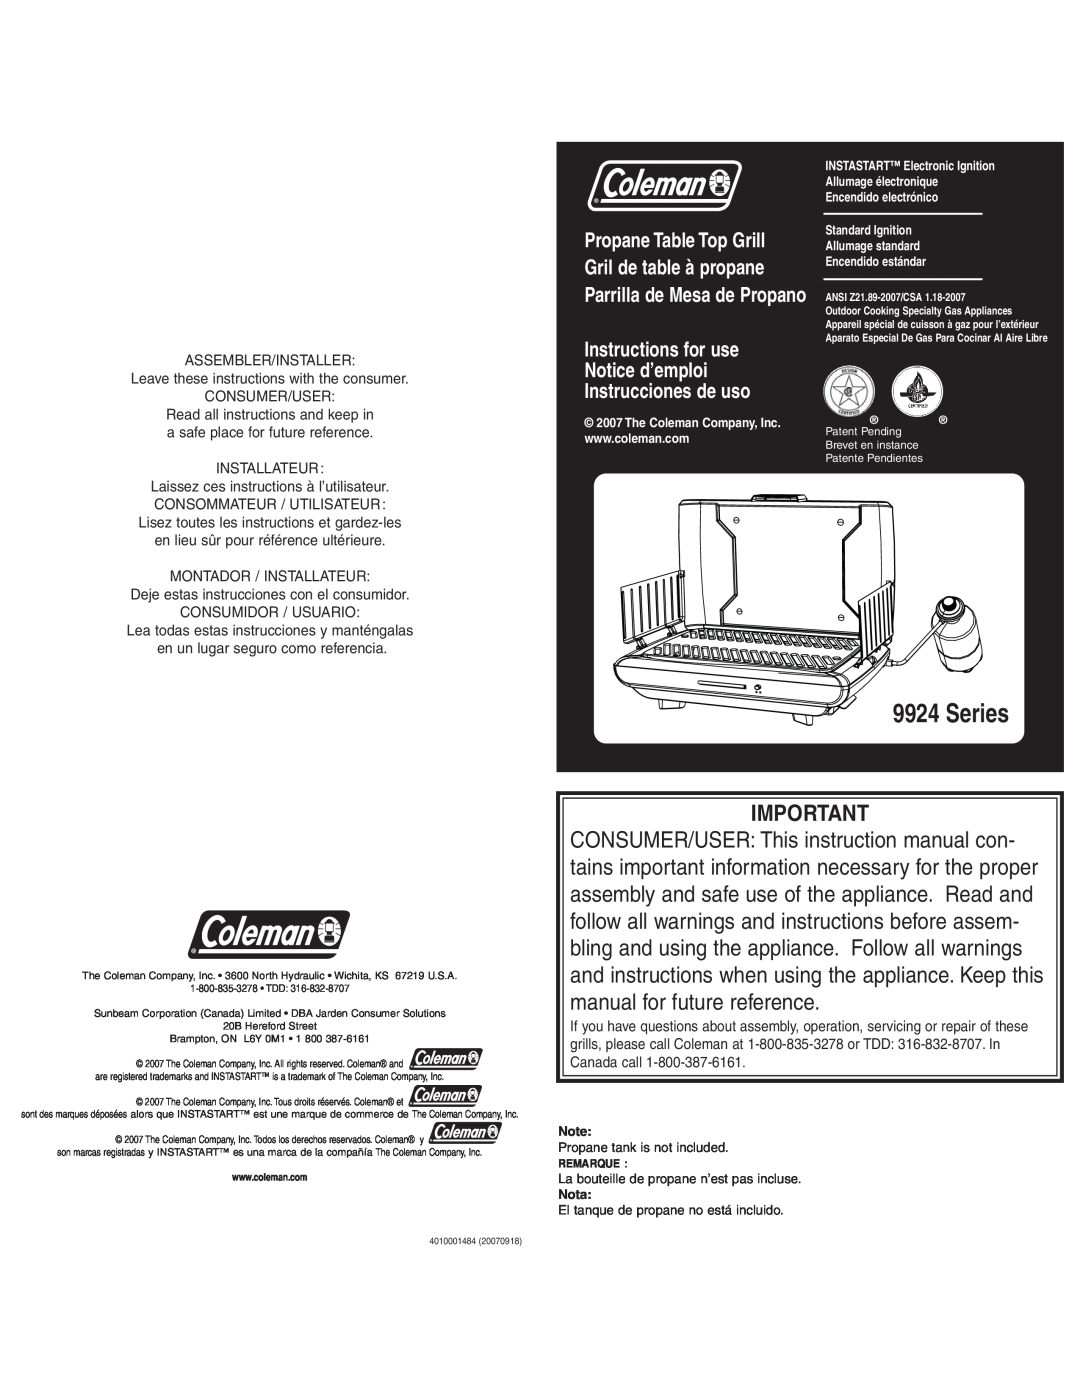 Coleman 9924 instruction manual Series, Instructions for use Notice d’emploi Instrucciones de uso, Consumer/User, Nota 